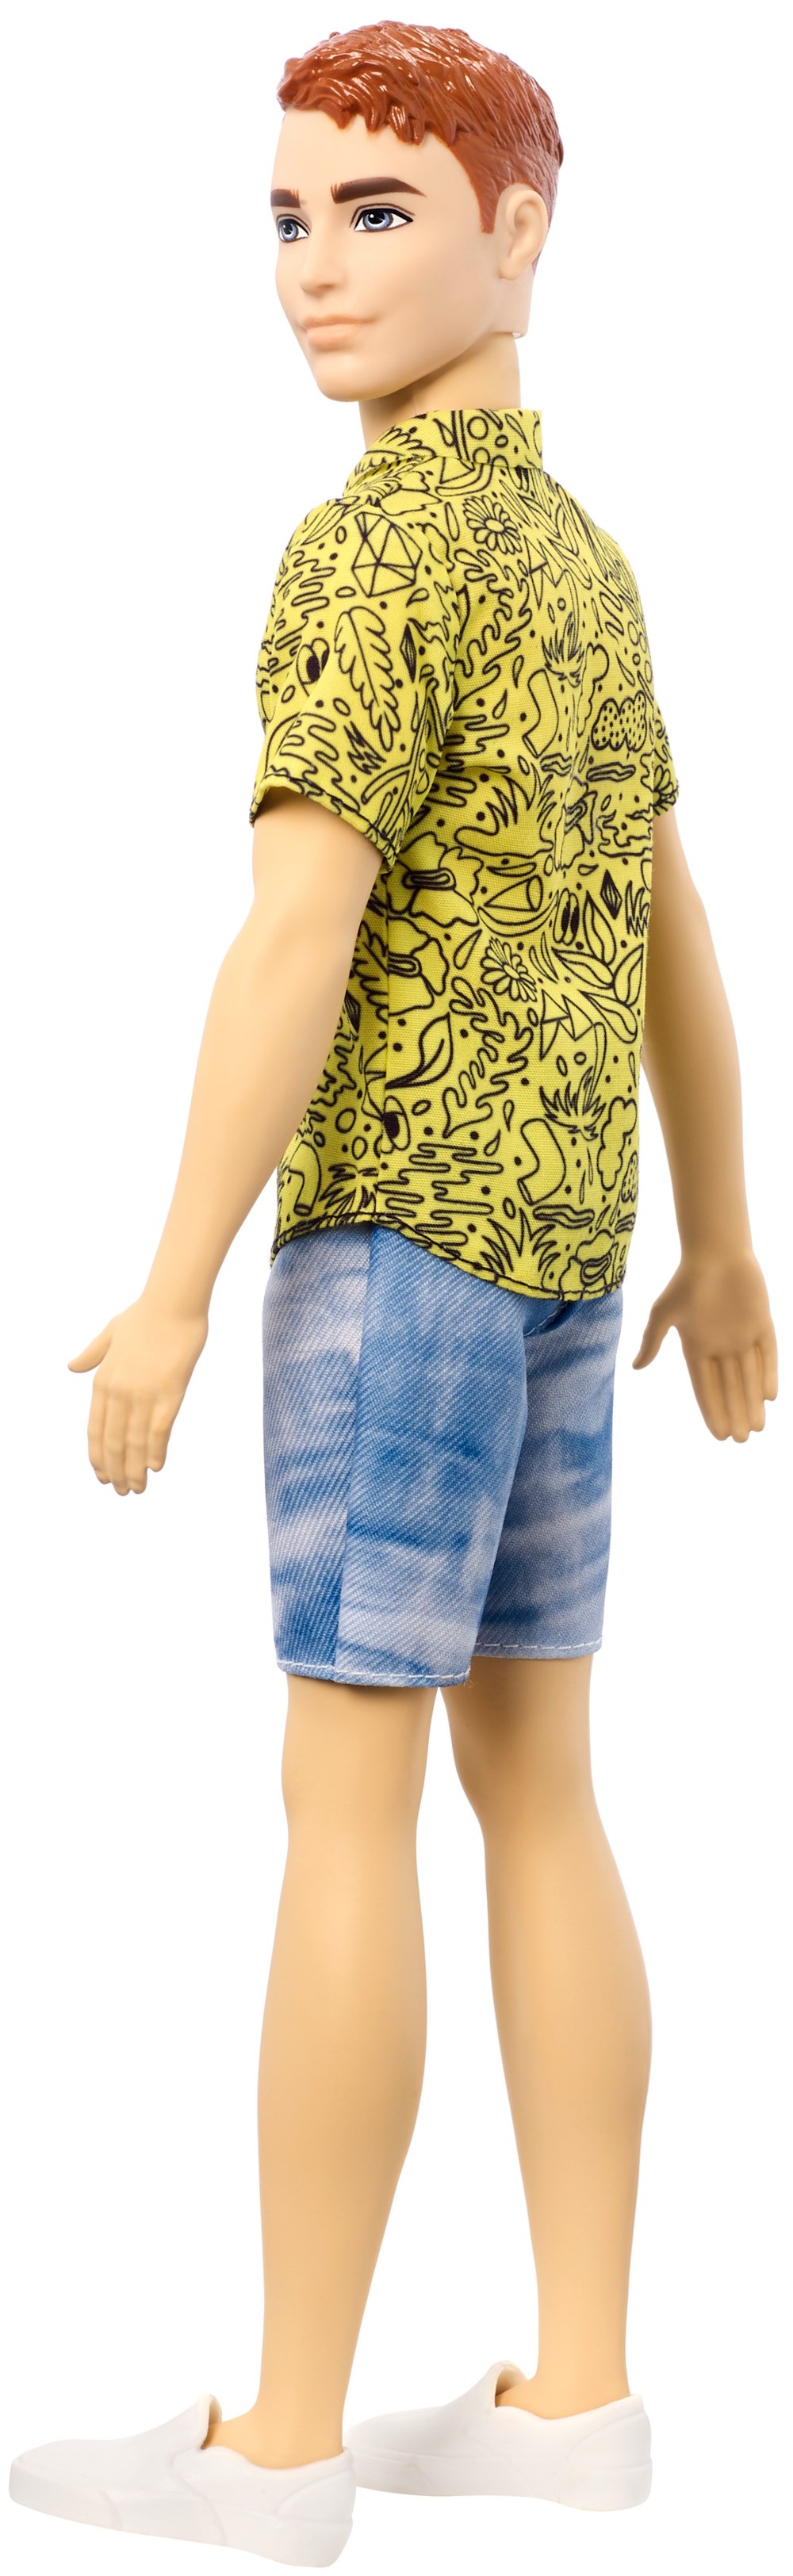 Кукла Barbie GHW67 Кен Игра с модой